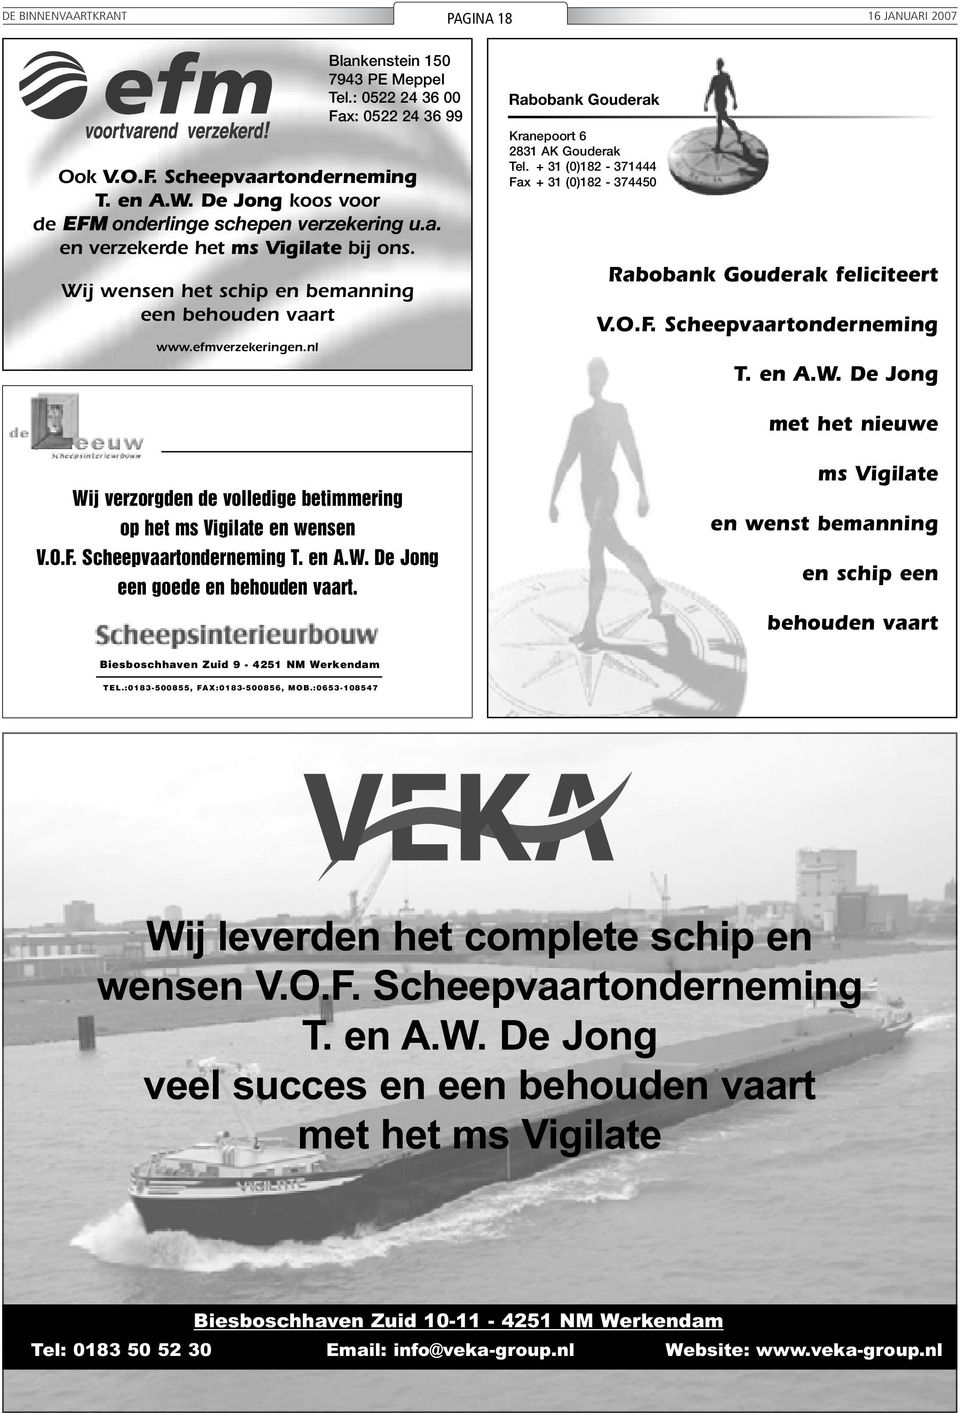 nl Rabobank Gouderak Kranepoort 6 2831 AK Gouderak Tel. + 31 (0)182-371444 Fax + 31 (0)182-374450 Rabobank Gouderak feliciteert V.O.F. Scheepvaartonderneming T. en A.W.